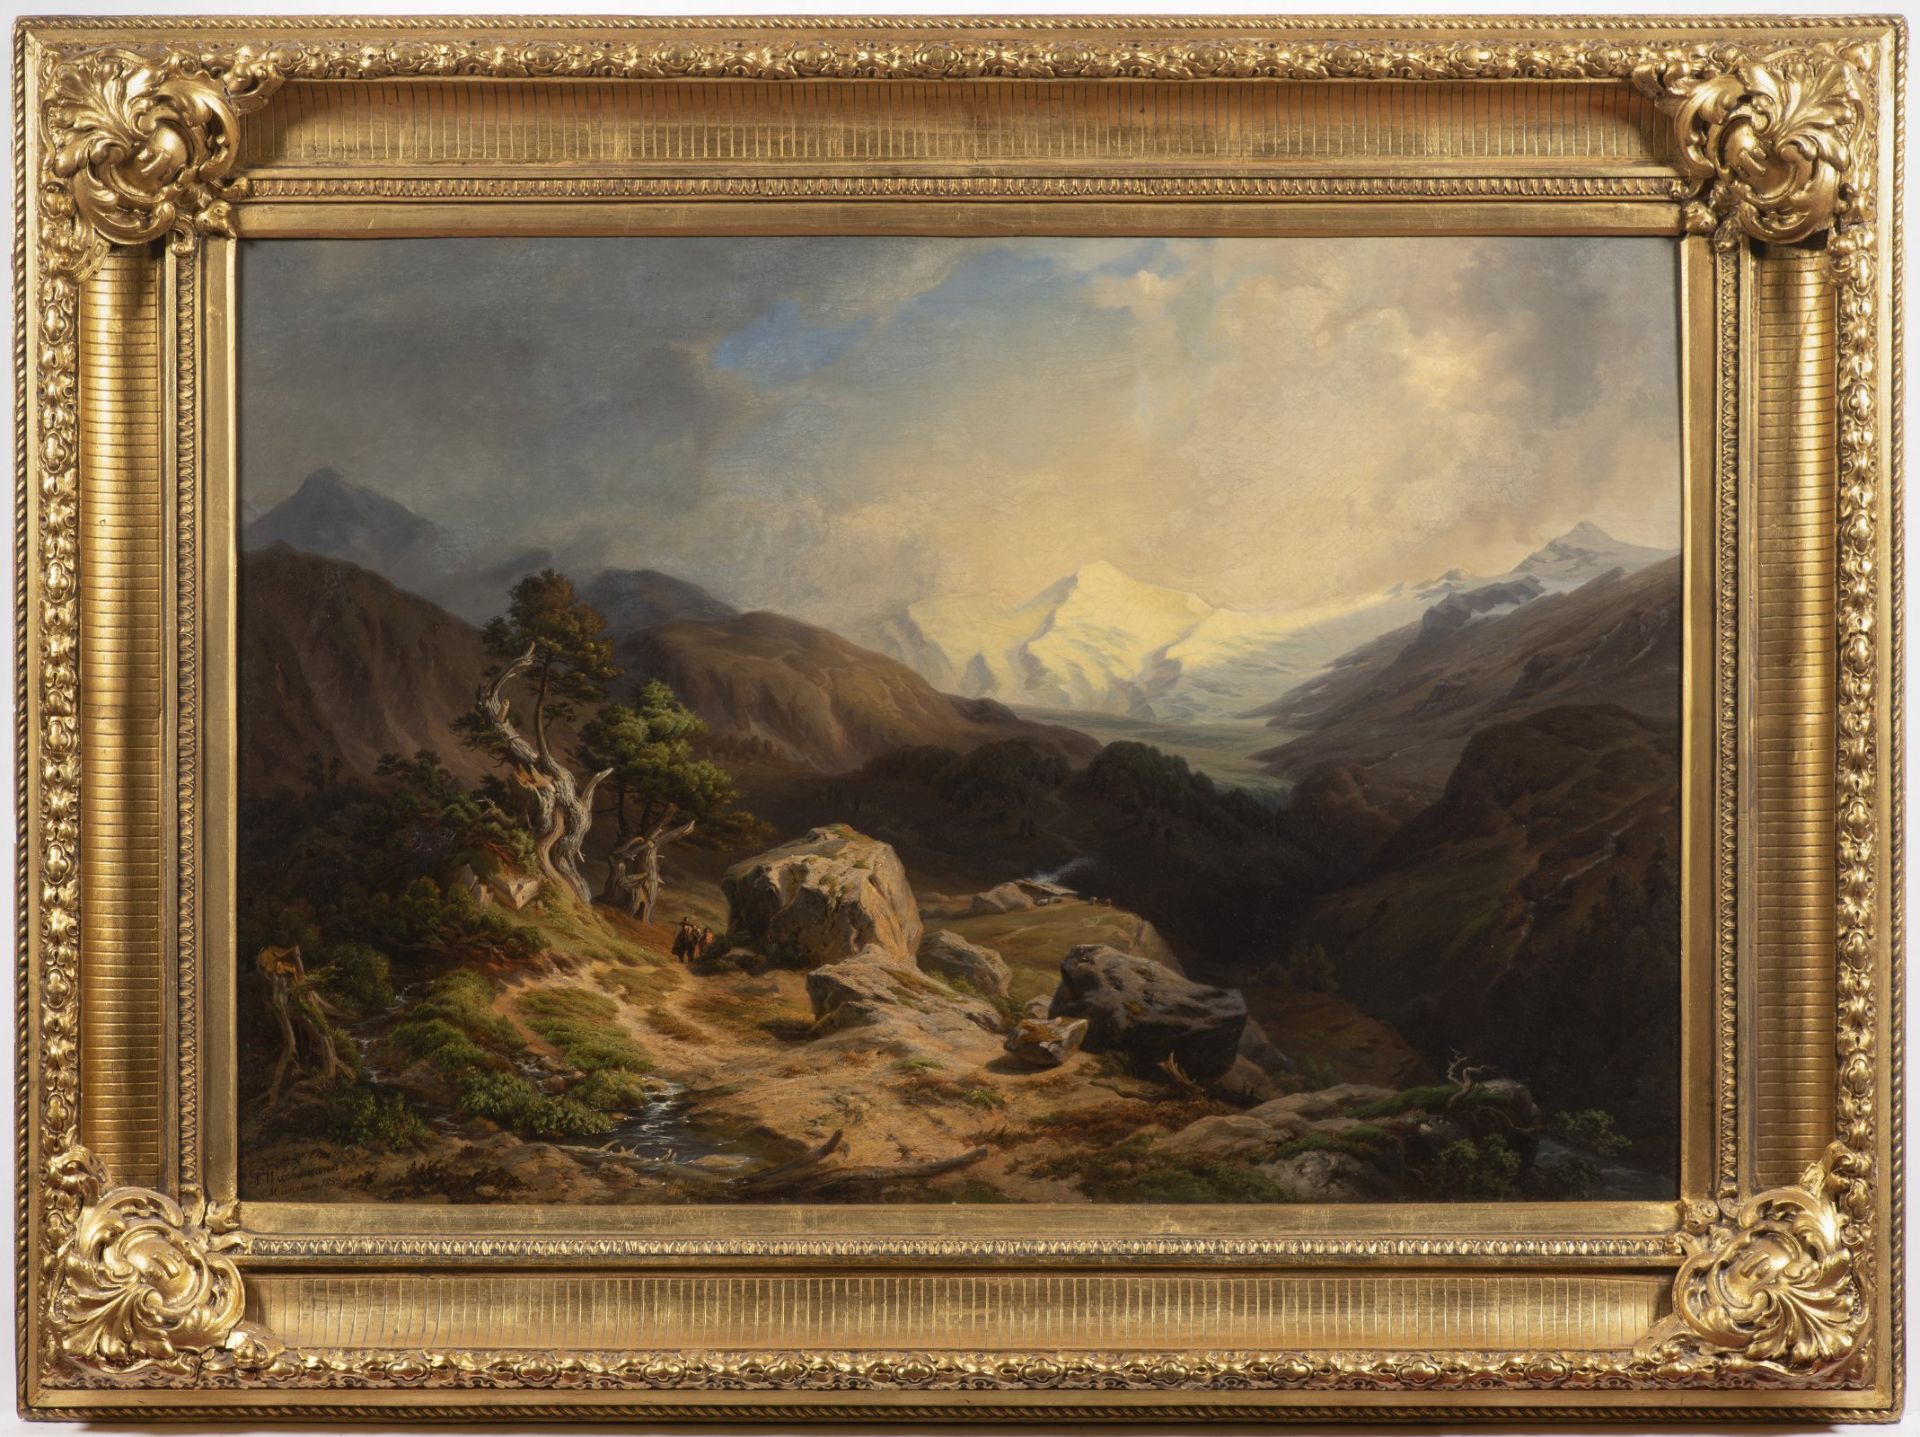 BEDŘICH (FRIEDRICH) WACHSMANN 1820 - 1897: MOUNTAIN LANDSCAPE 1852 Munich Oil on canvas 68 x 101